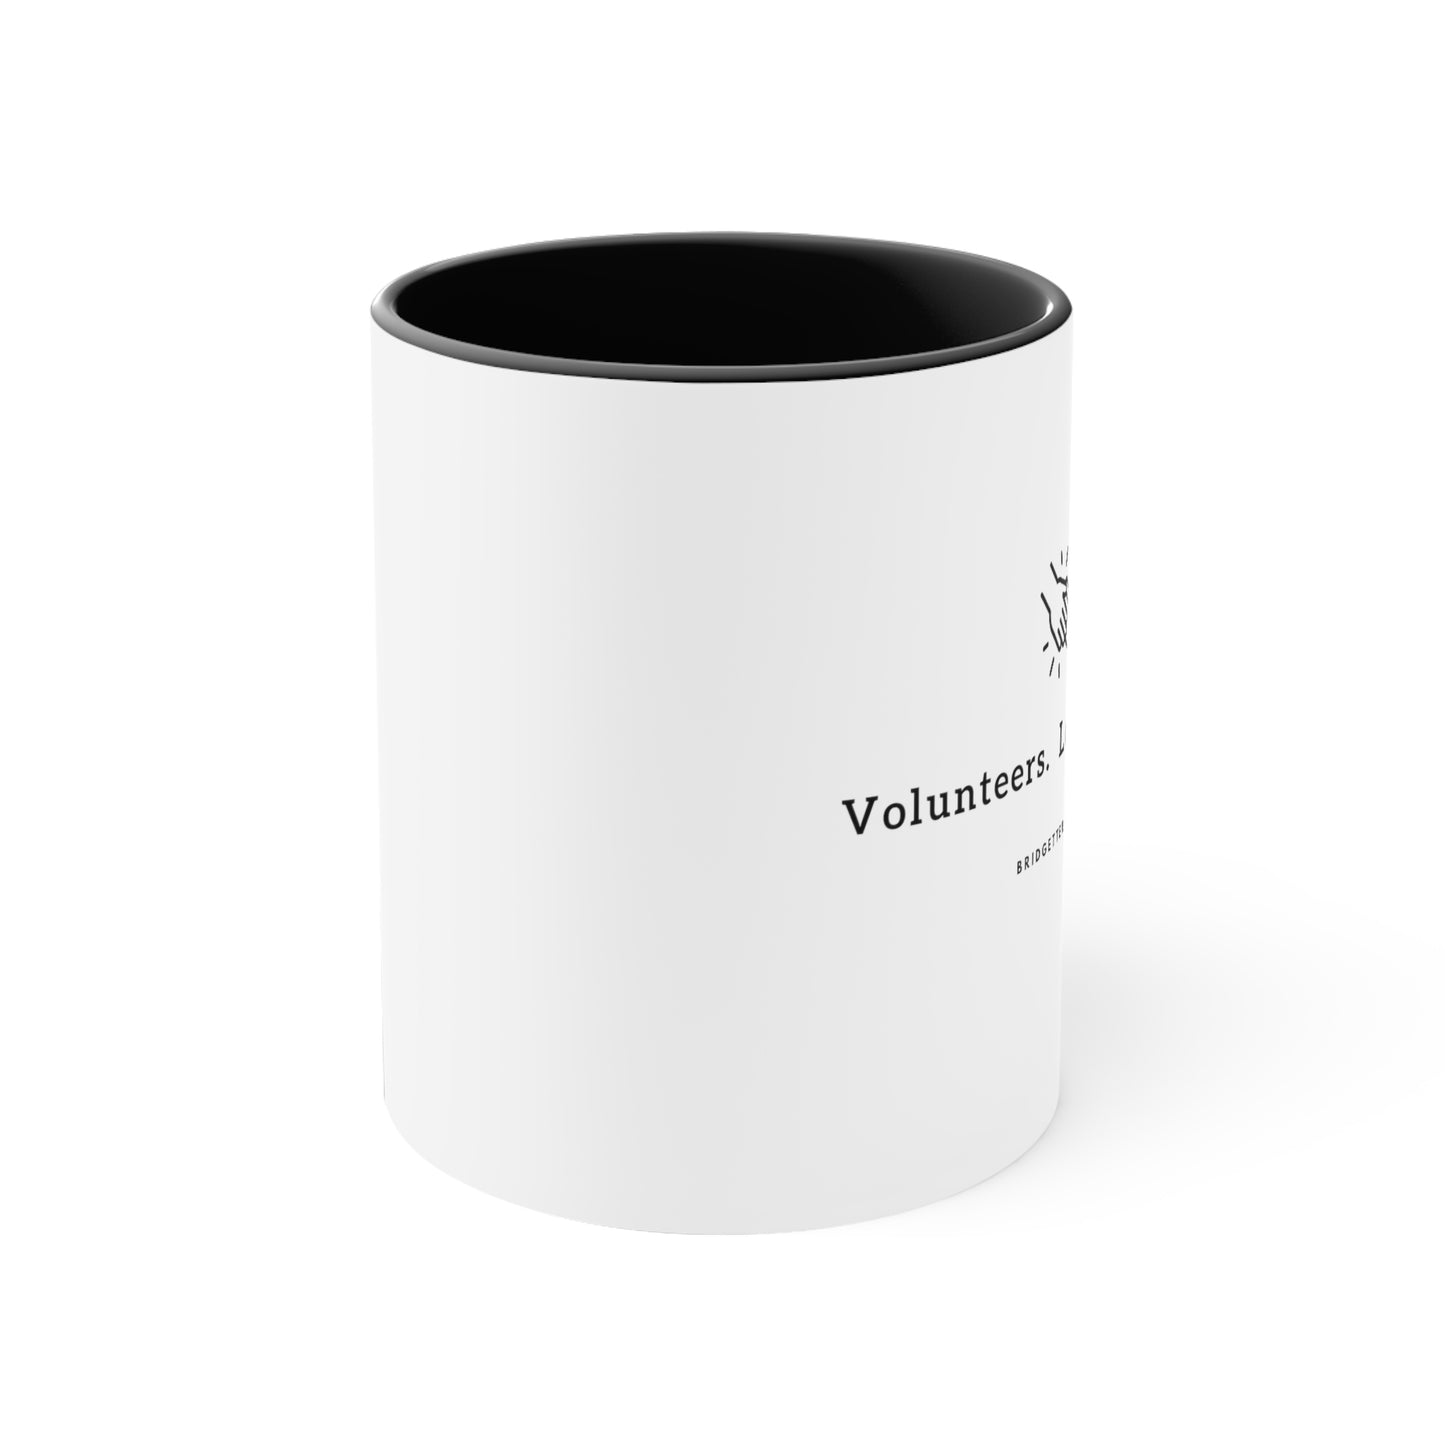 Volunteers.  Loves Fashion 11oz Accent Coffee Mug